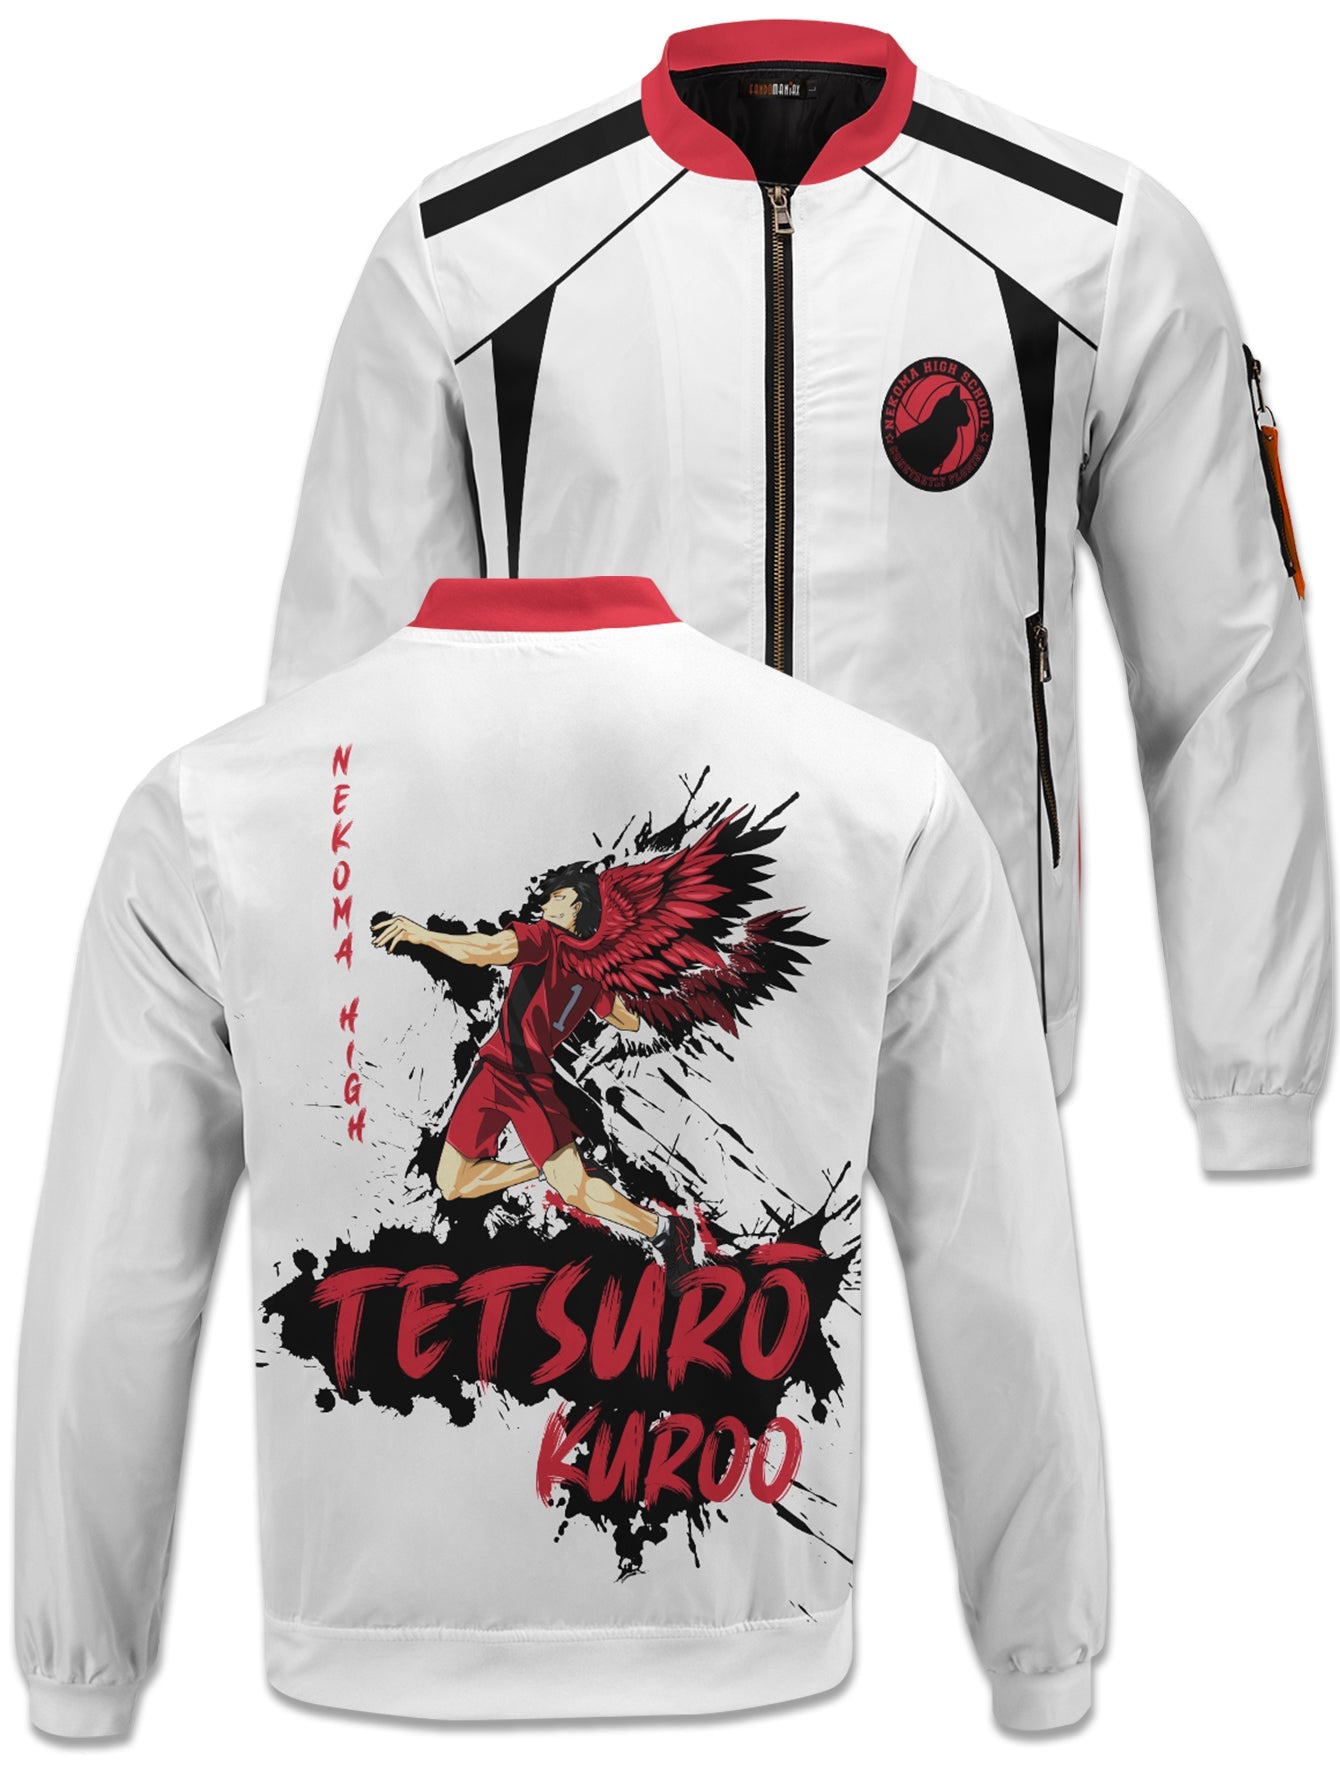 Fandomaniax - Tetsuro Wings Bomber Jacket